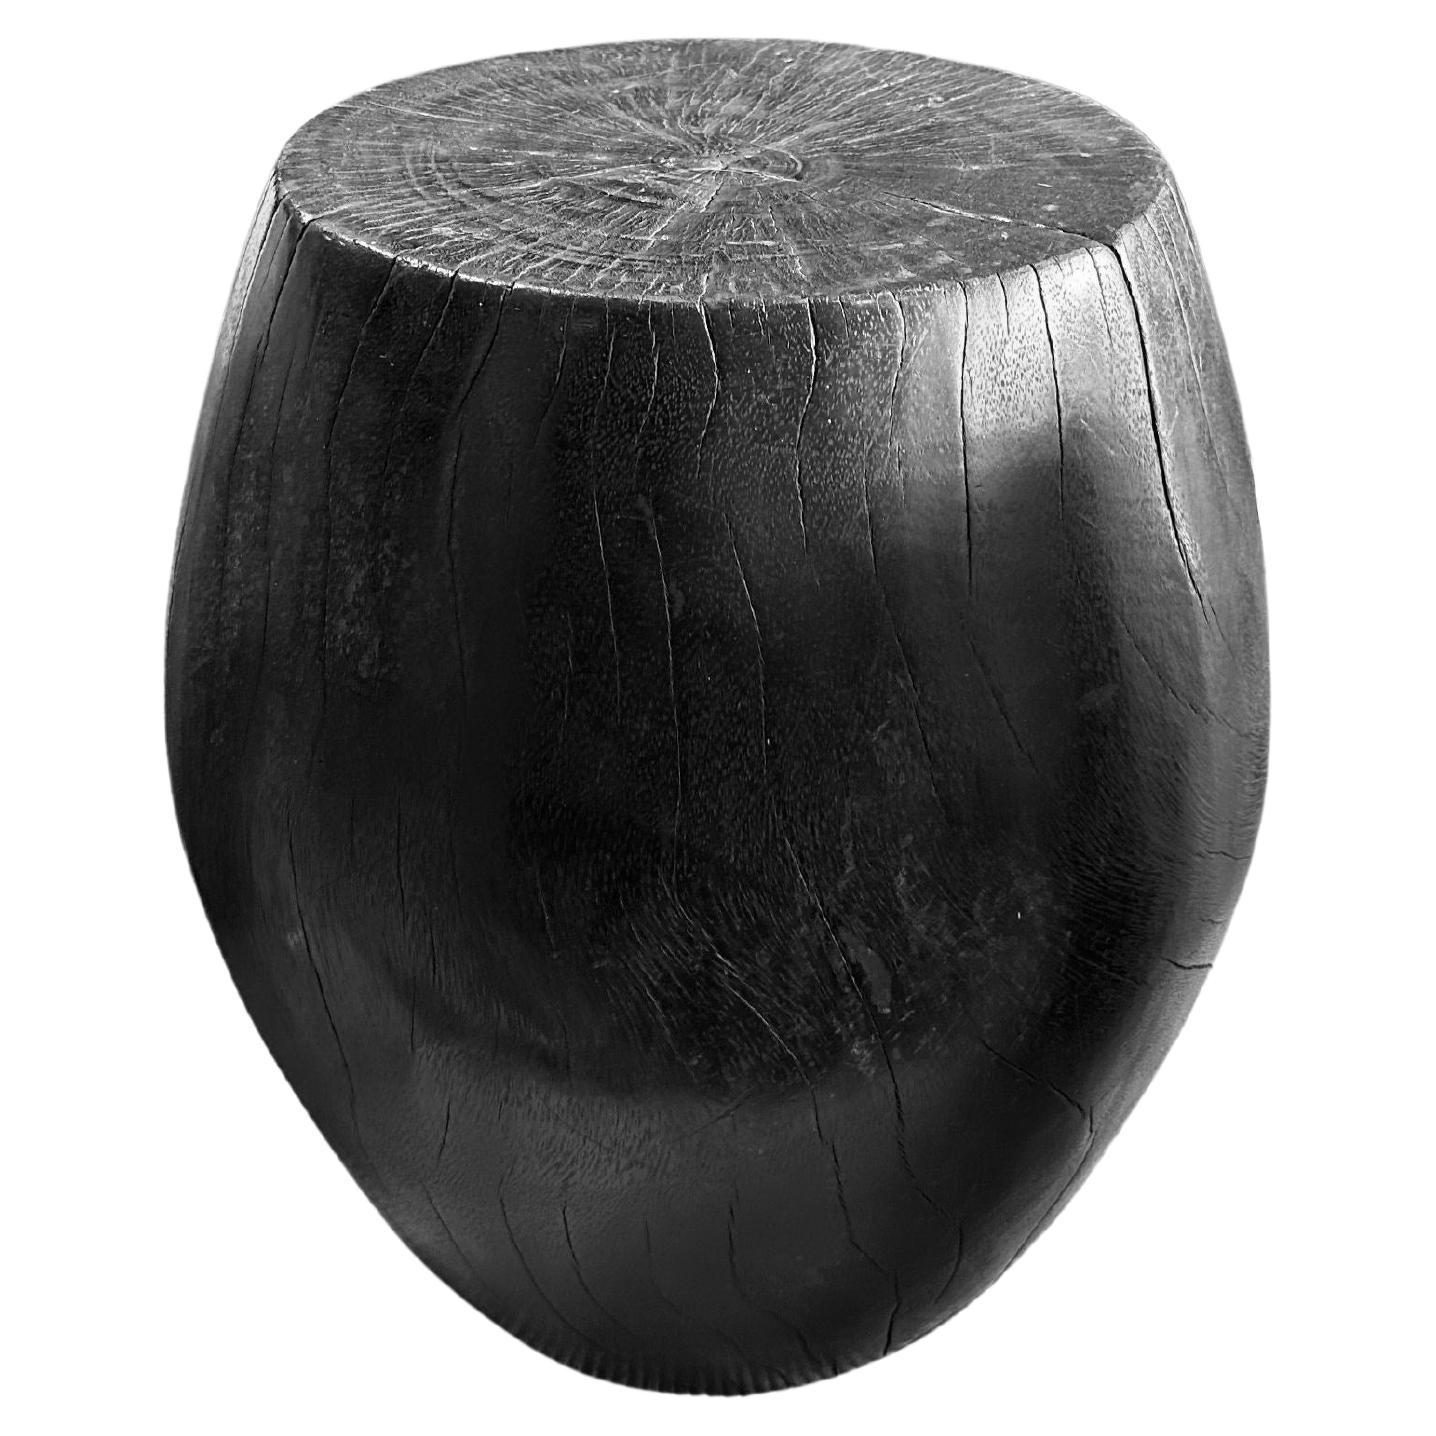 Round Mango Wood Side Table, Burnt Finish, Carved Detailing, Modern Organic